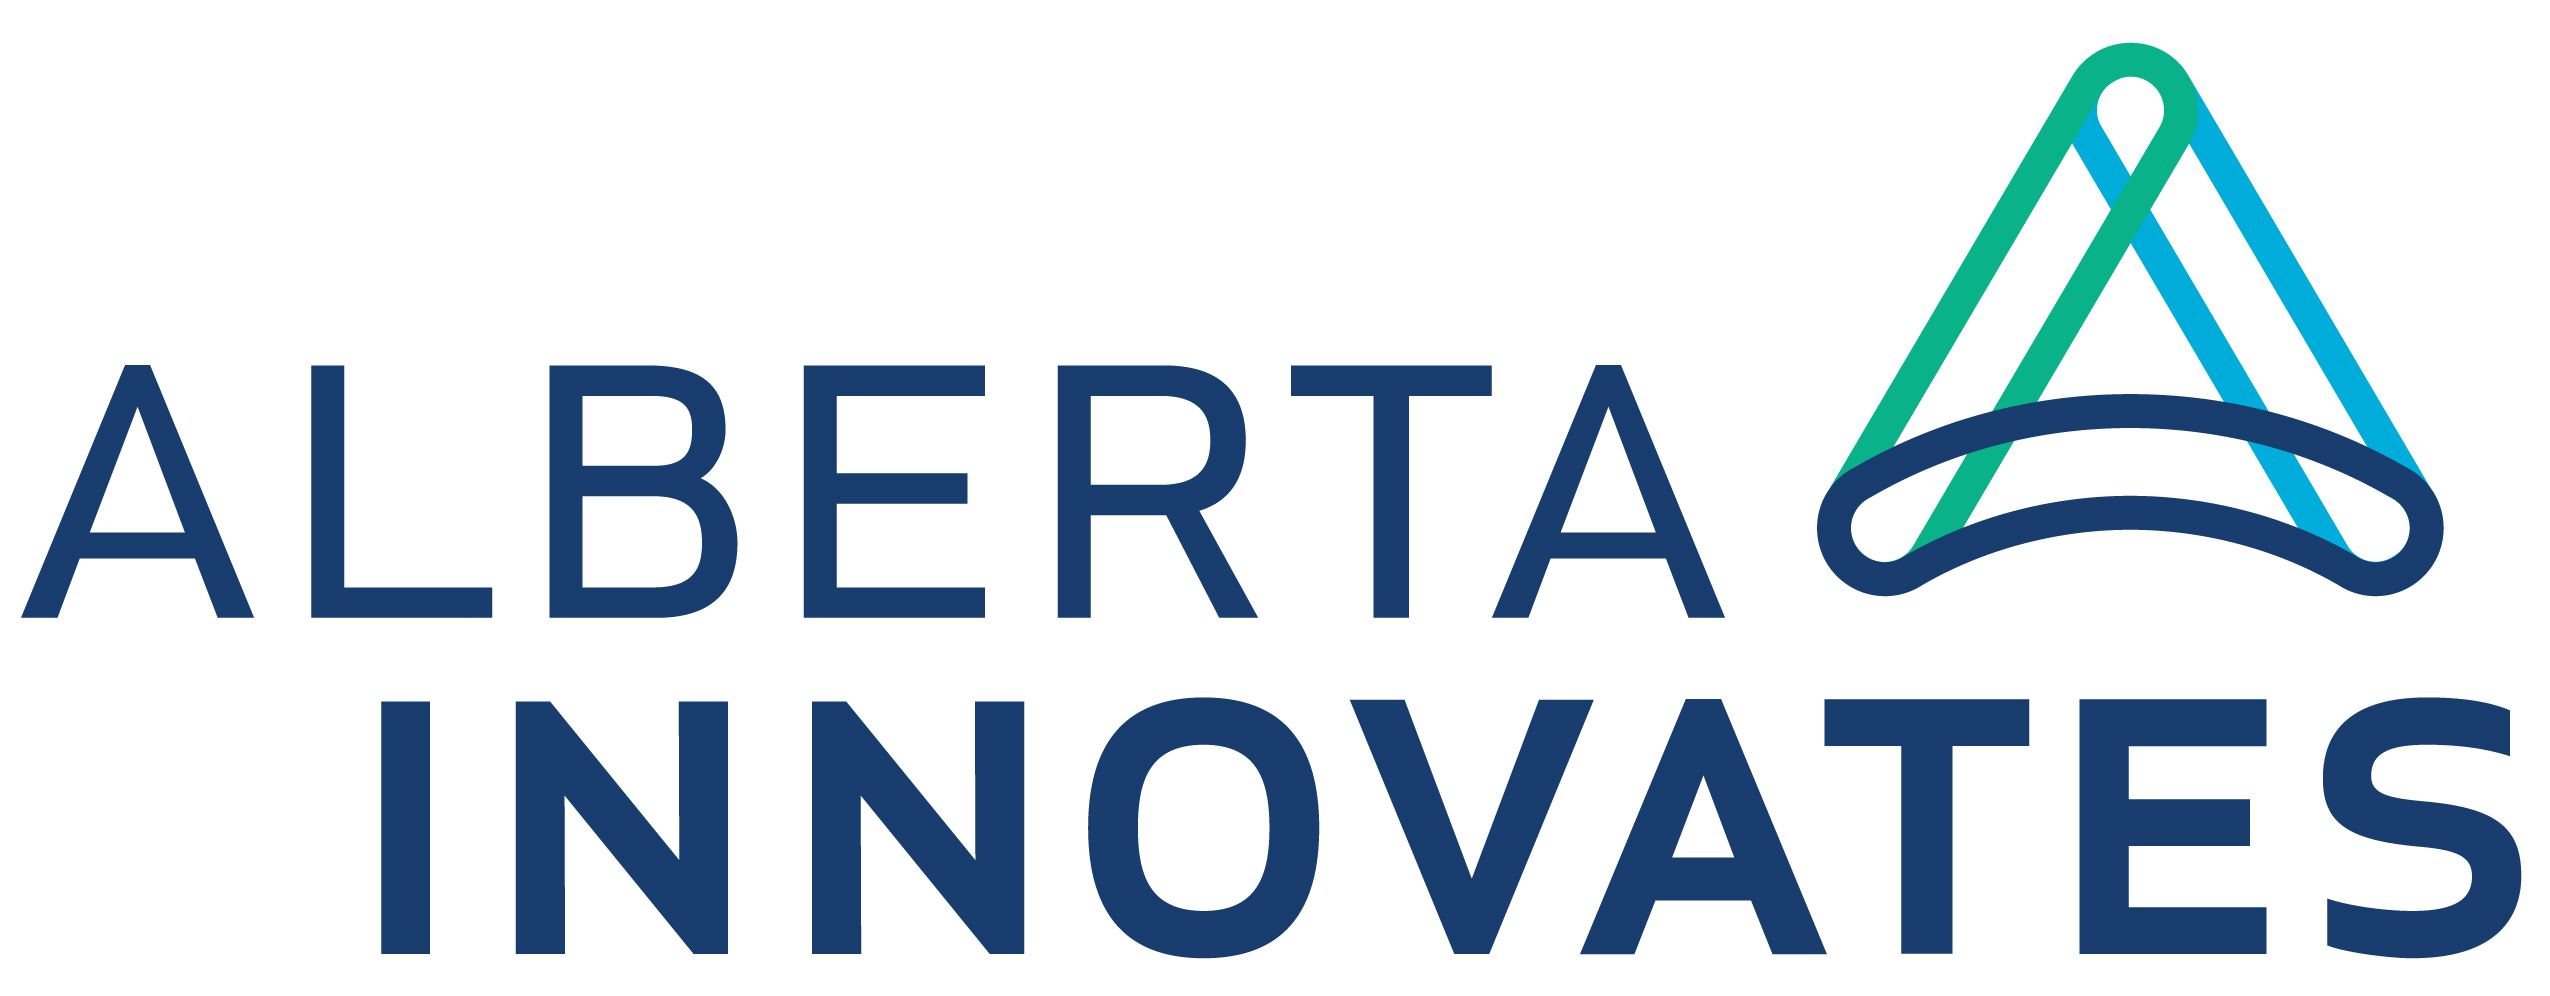 Alberta Innovates vertical logo